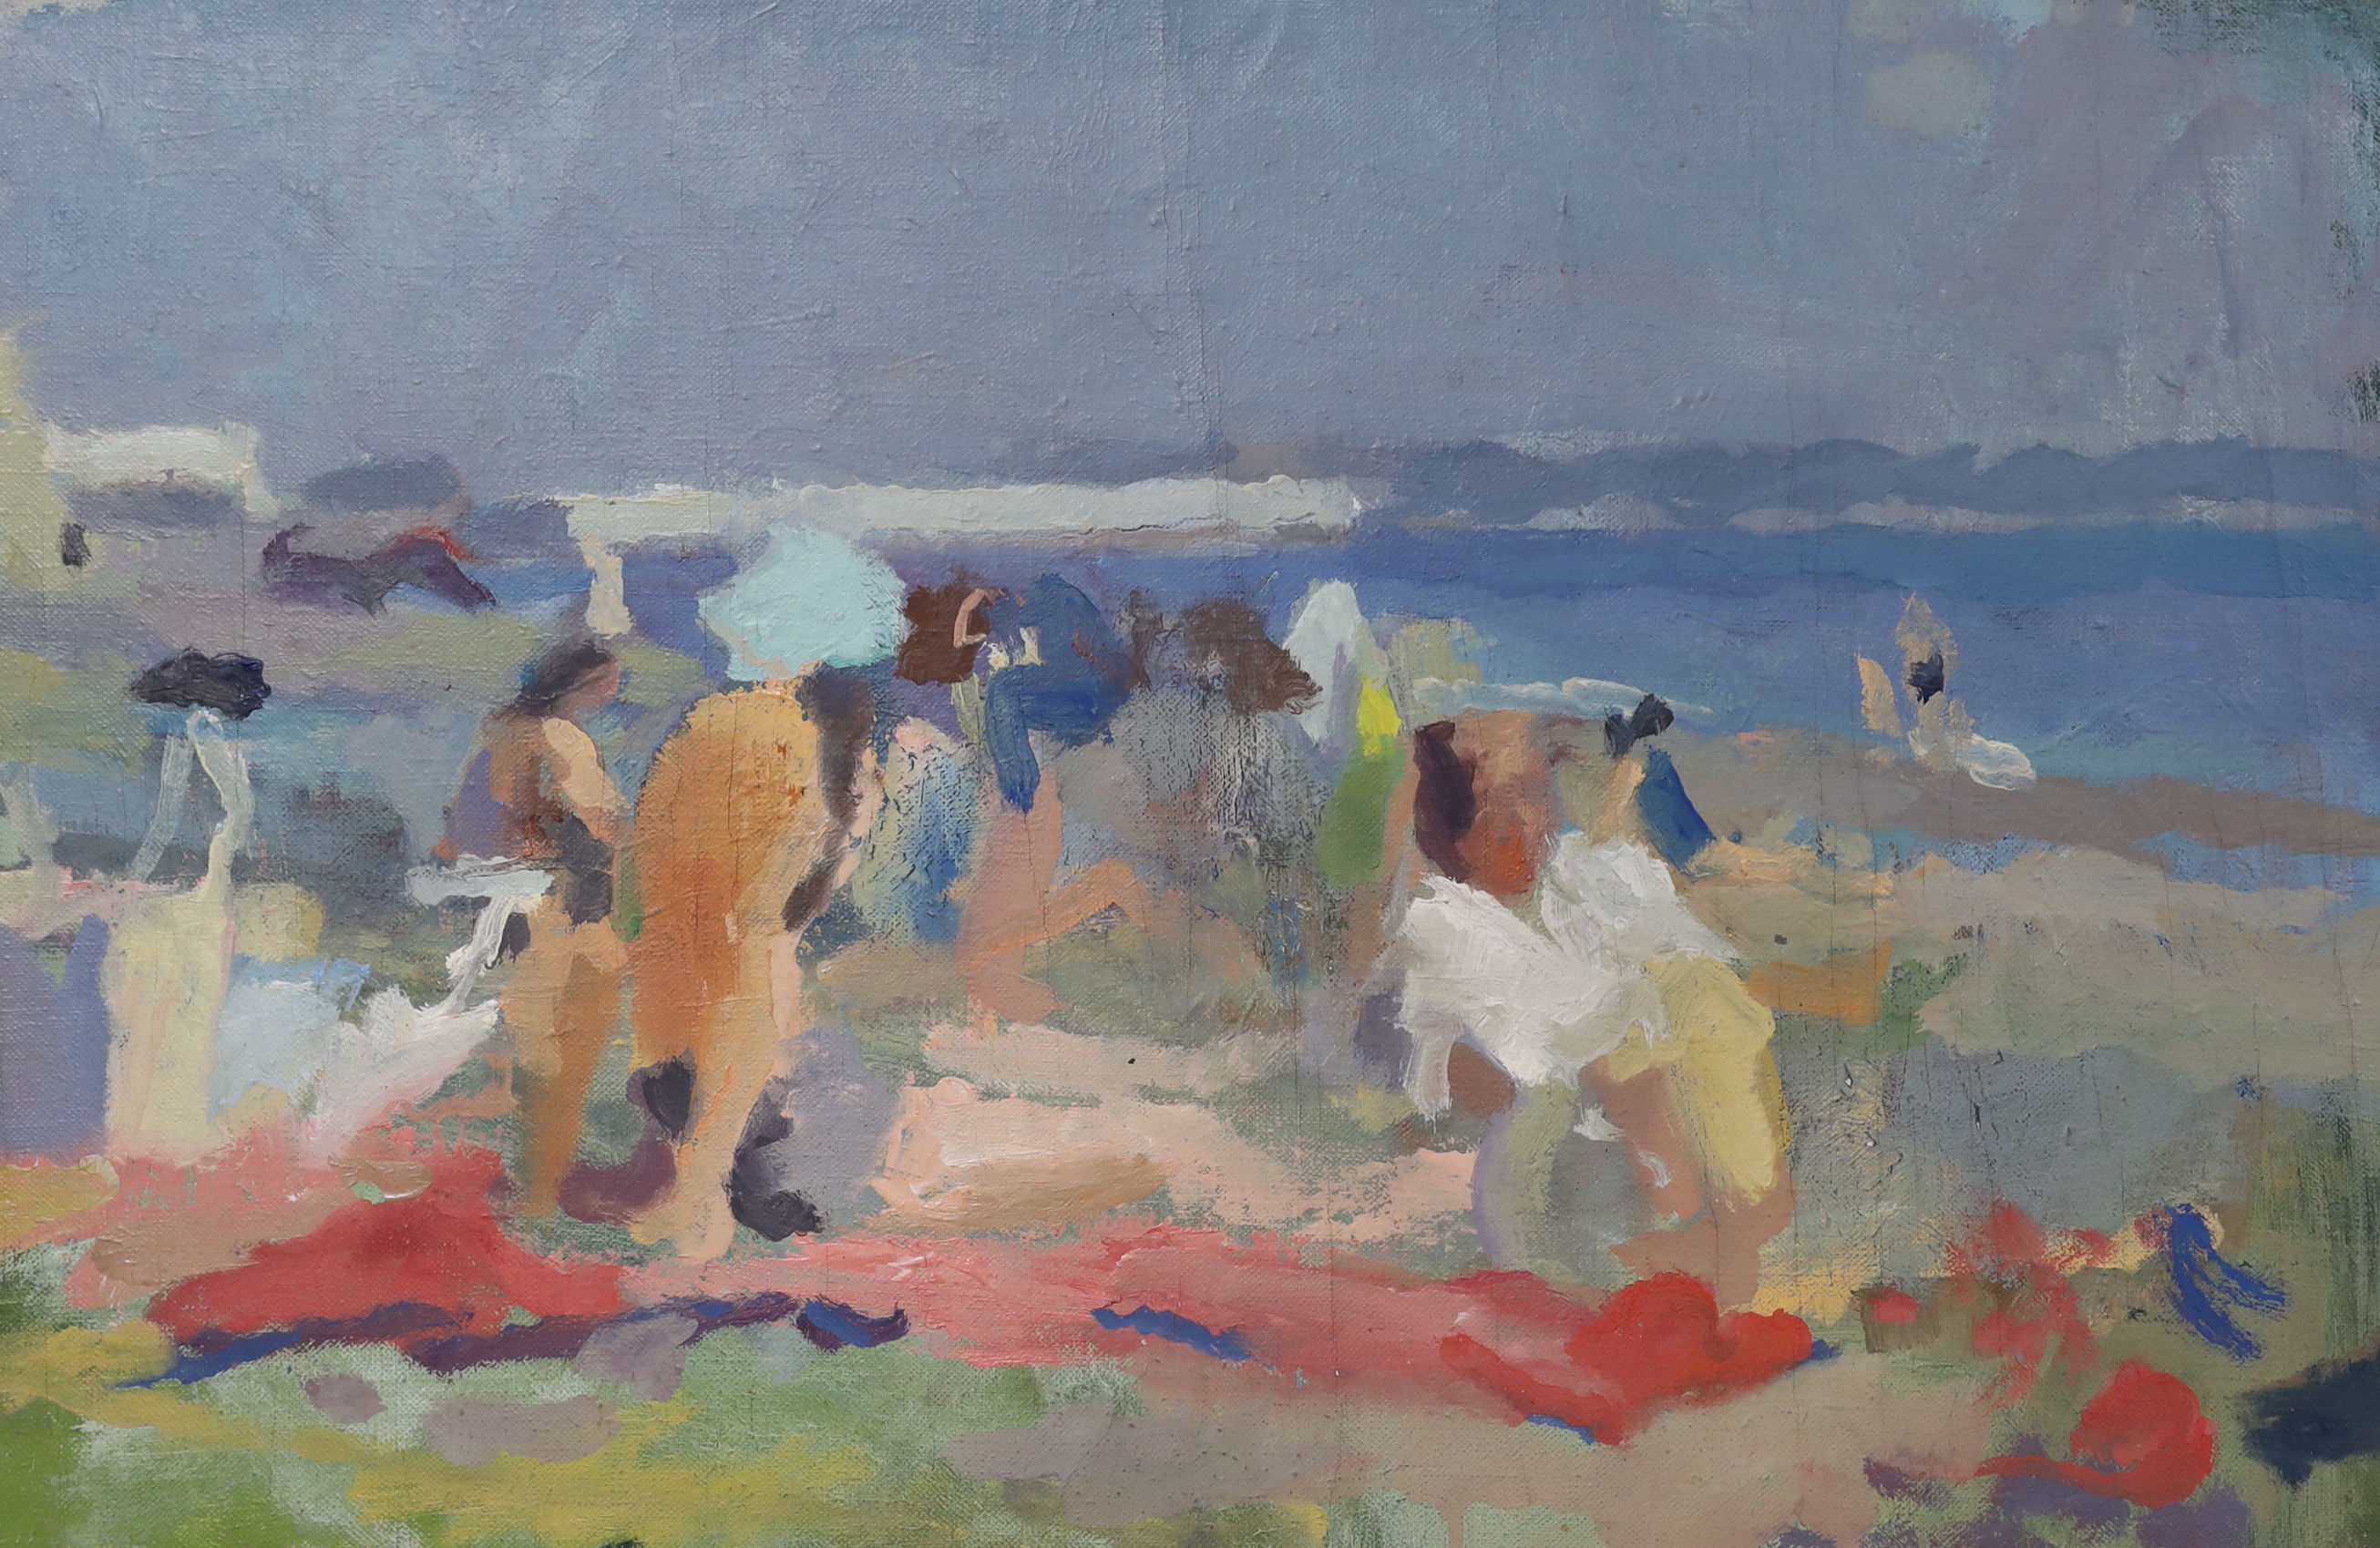 John Harvey (b.1935), oil on canvas, Figures on the beach, artist stamp verso, 30 x 46cm, unframed